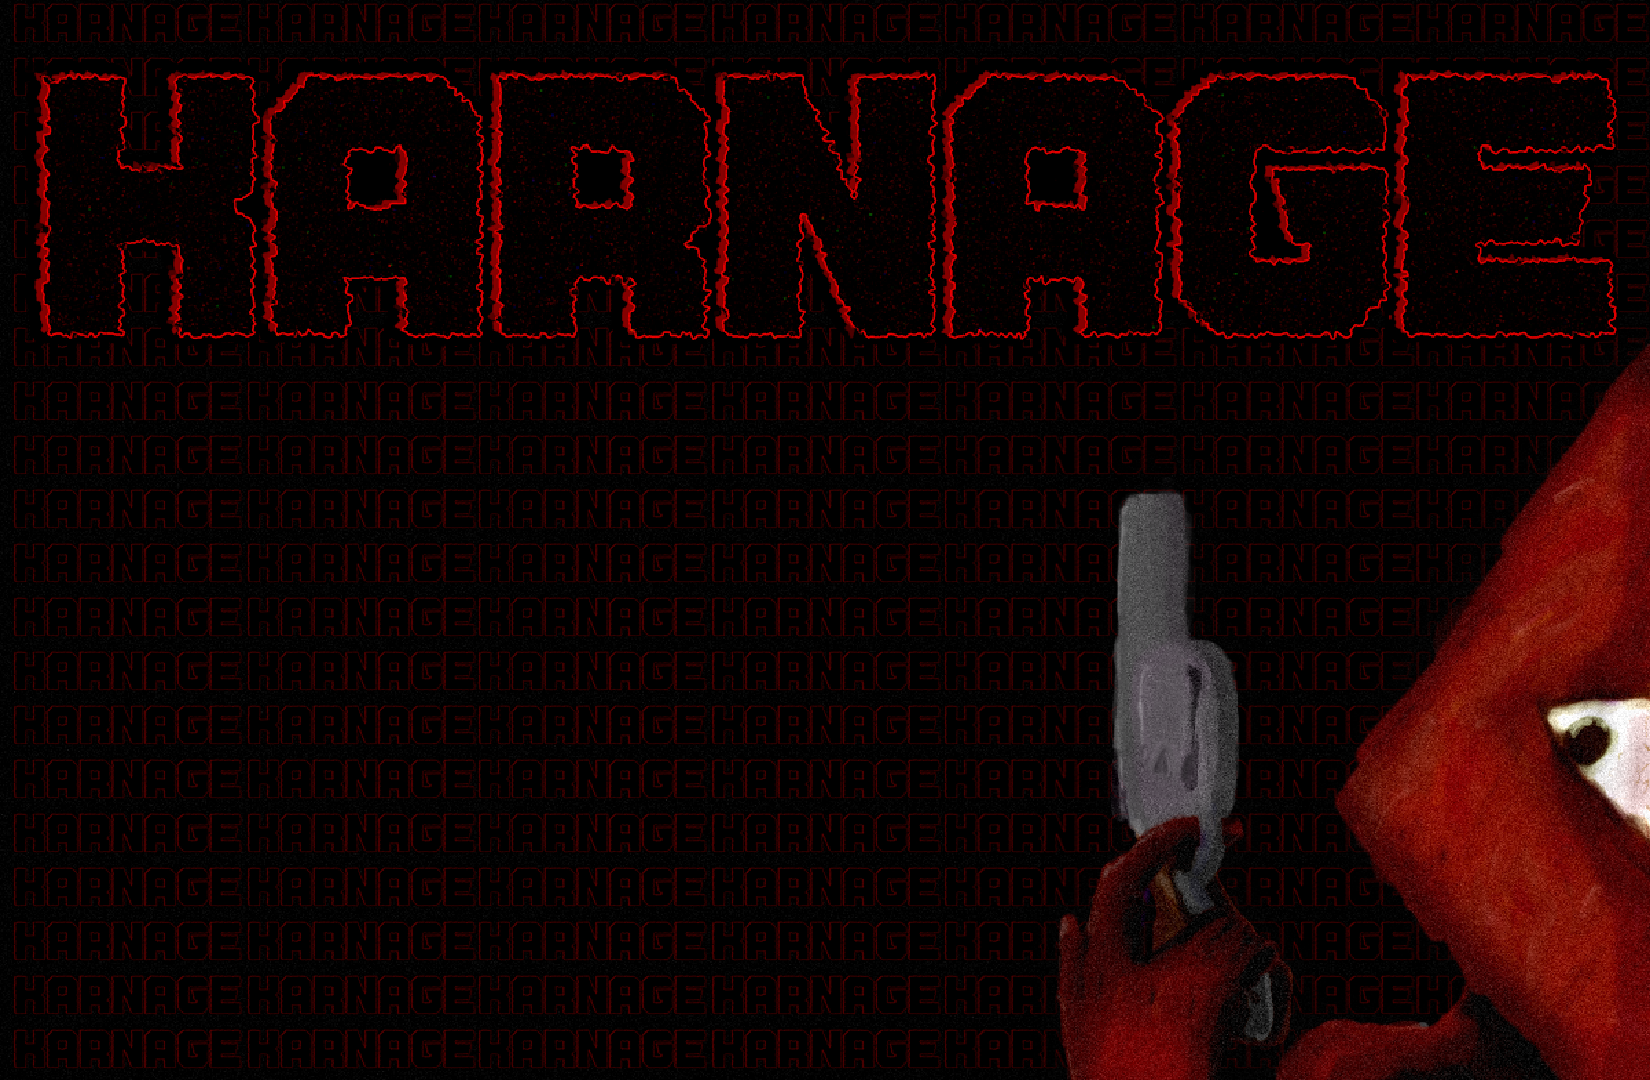 Karnage